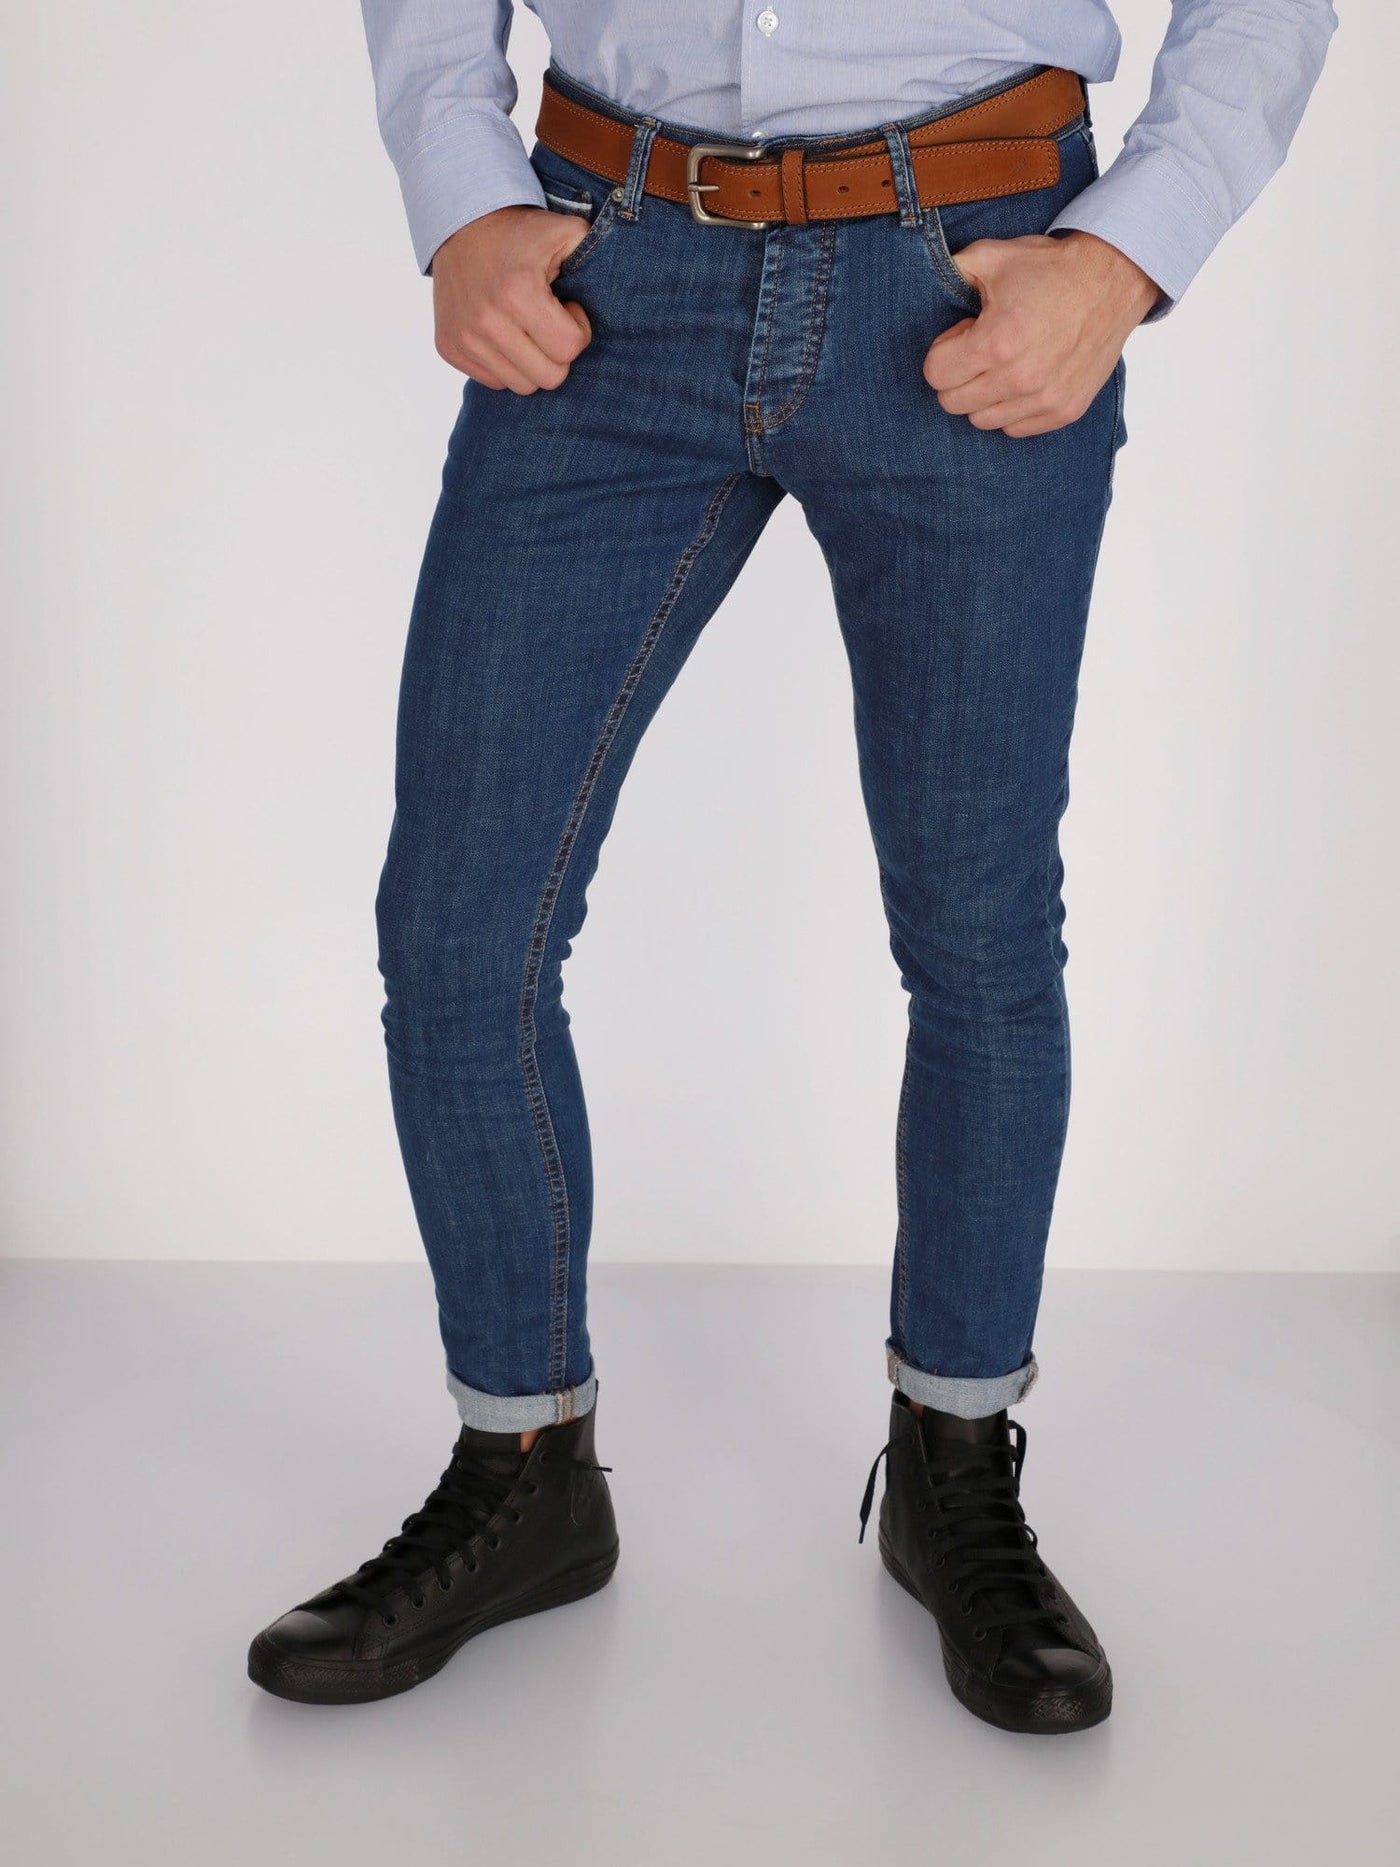 OR Pants & Shorts Dark Blue Jeans / 30 Skinny Jeans Pants